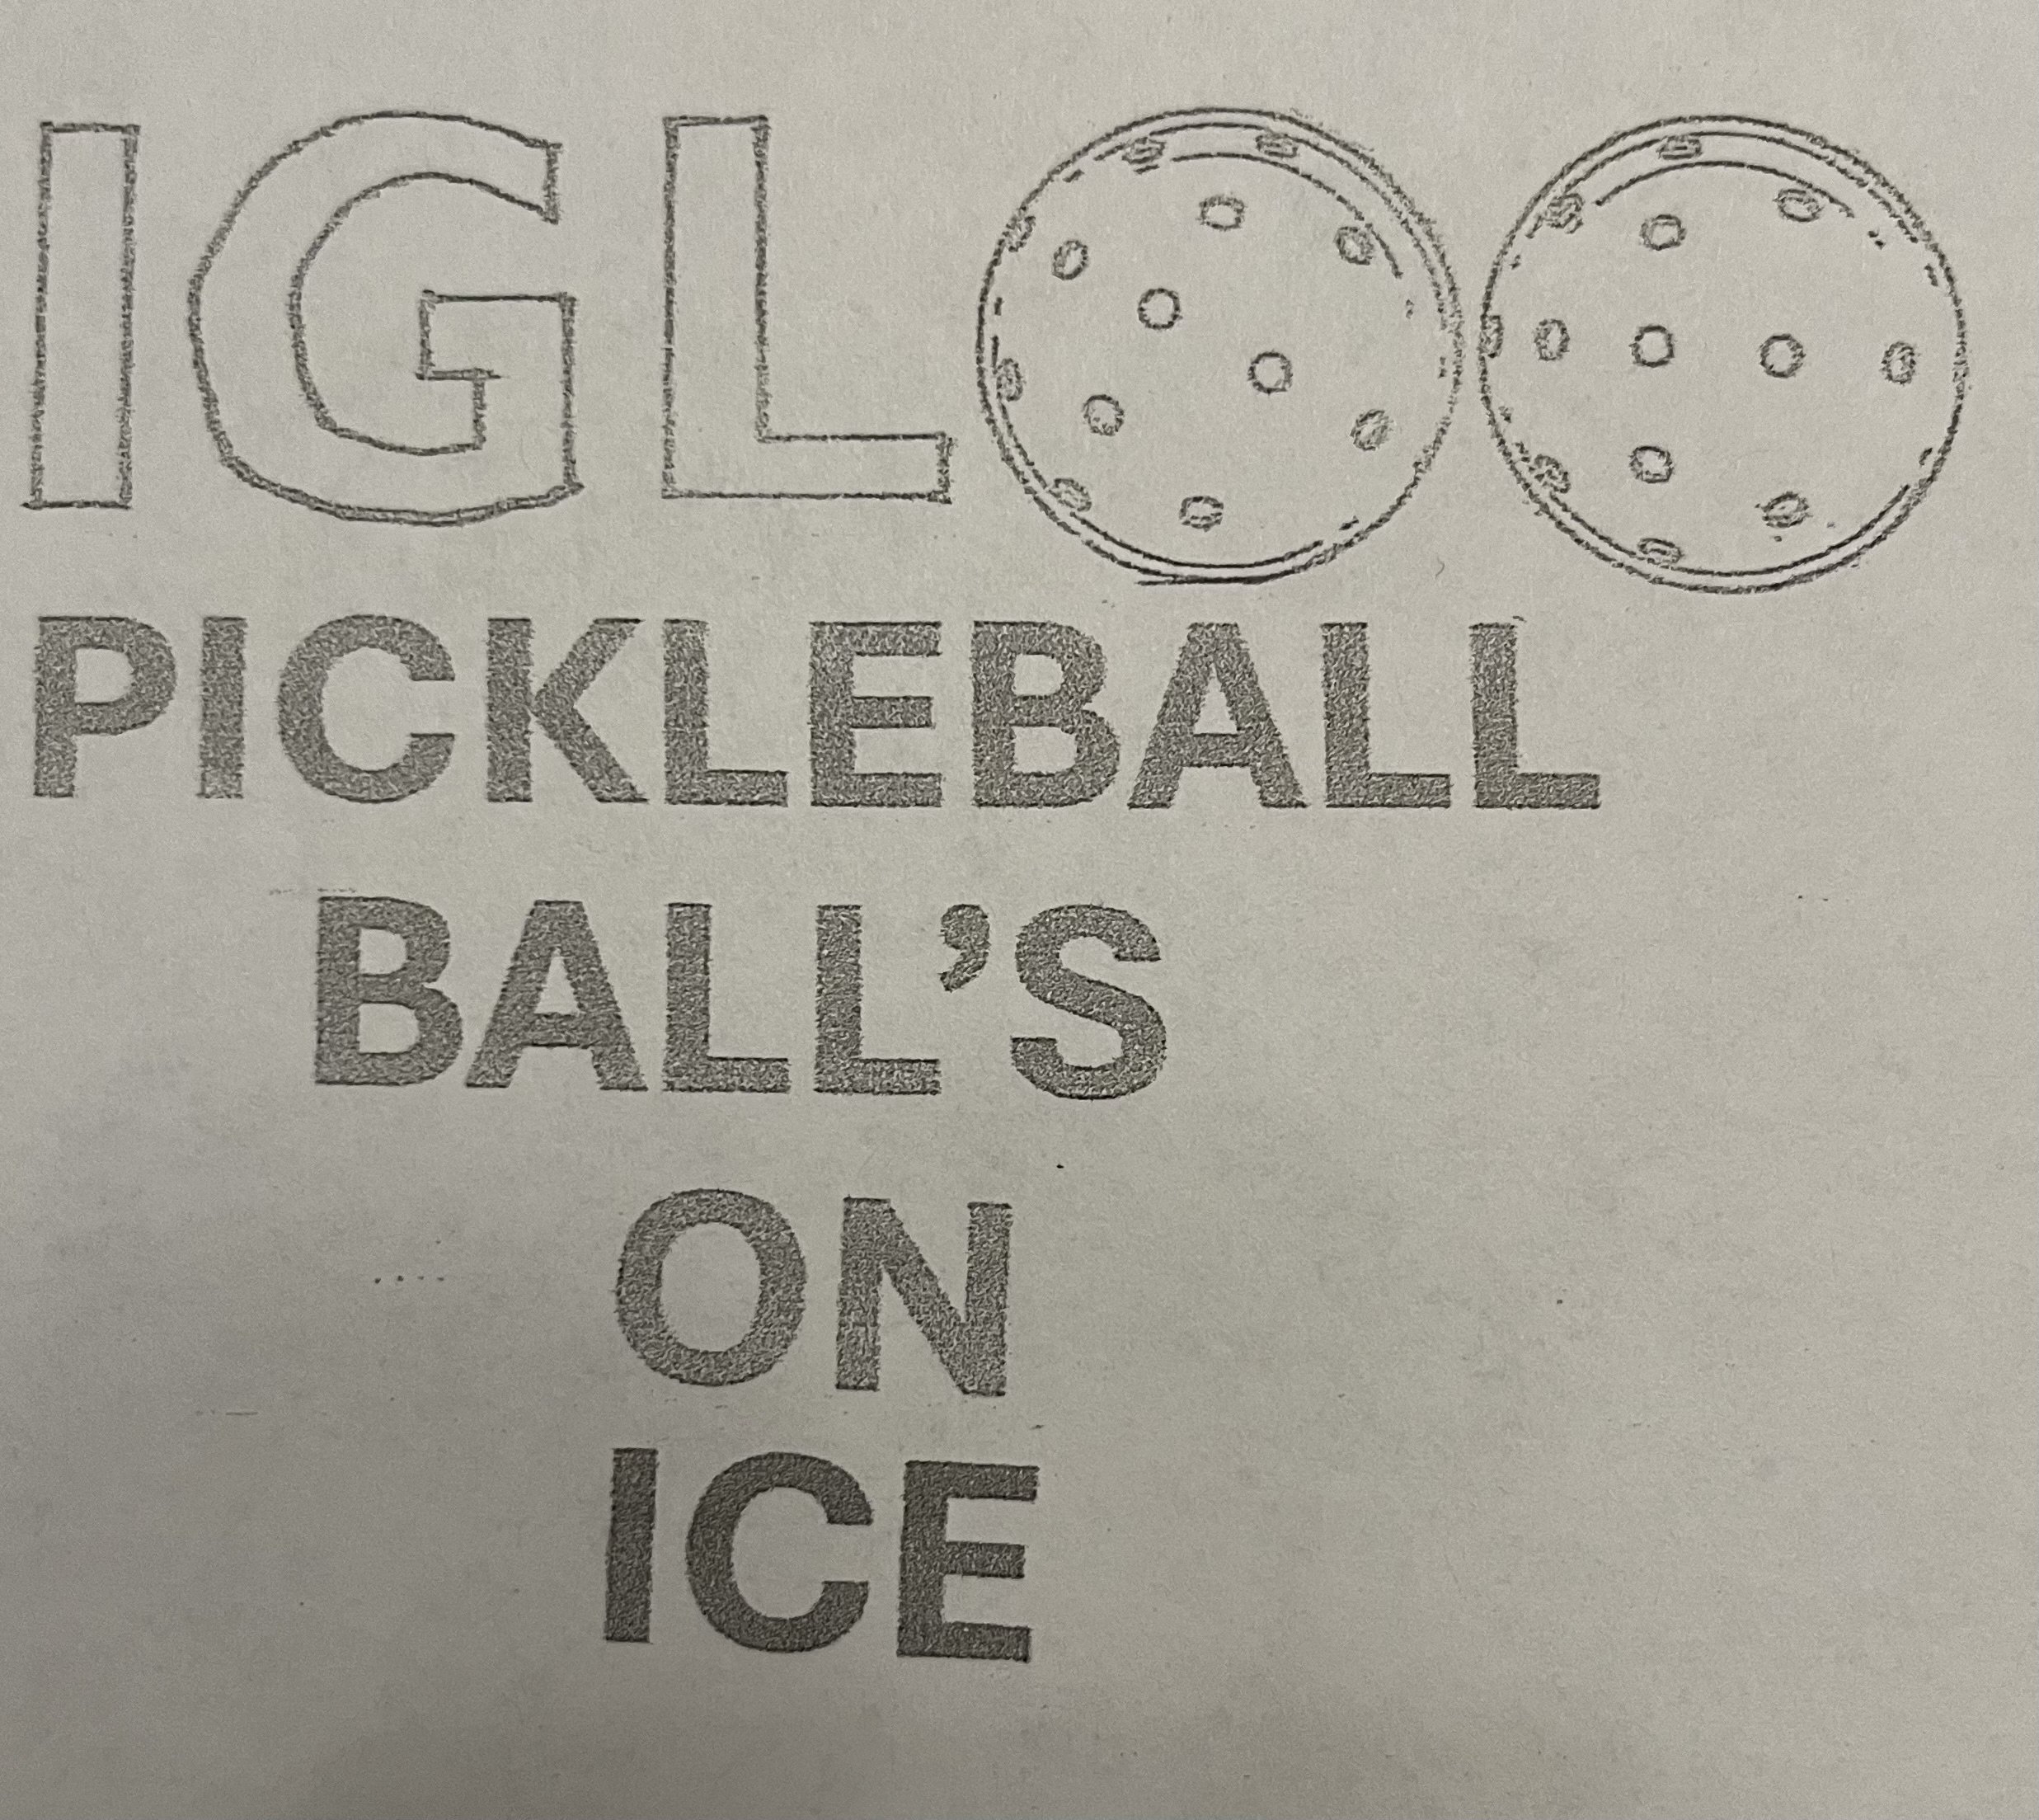  IGL PICKLEBALL BALL'S ON ICE